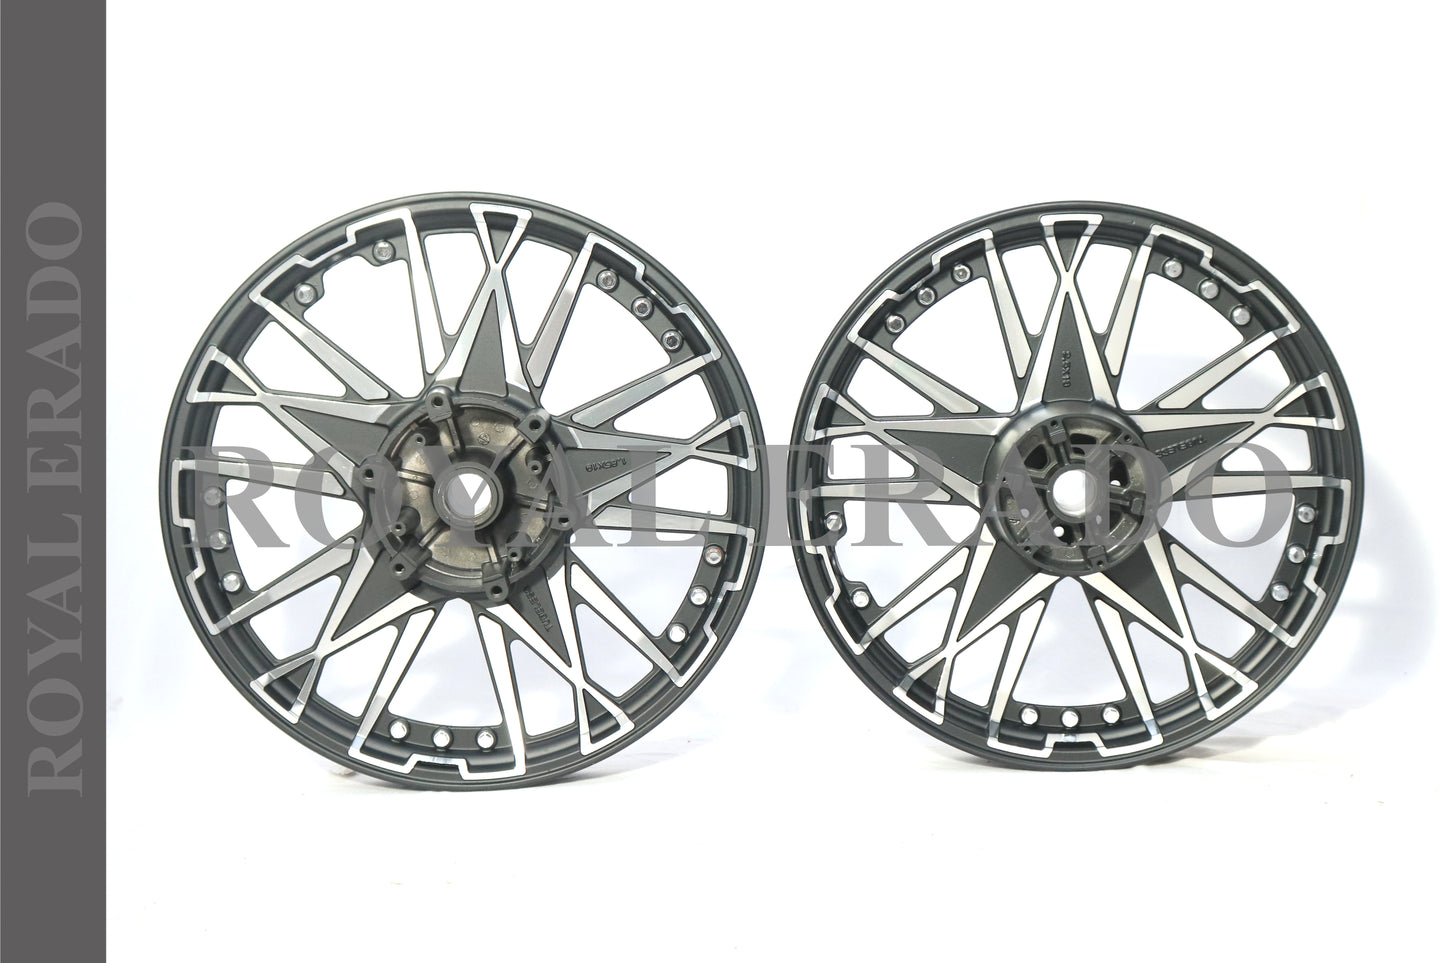 DOUBLE STAR DESIGN Alloy Wheel for STANDARD ABS Royal-Enfield Bullet X 350CC, Electra, Thunderbird 2010 model